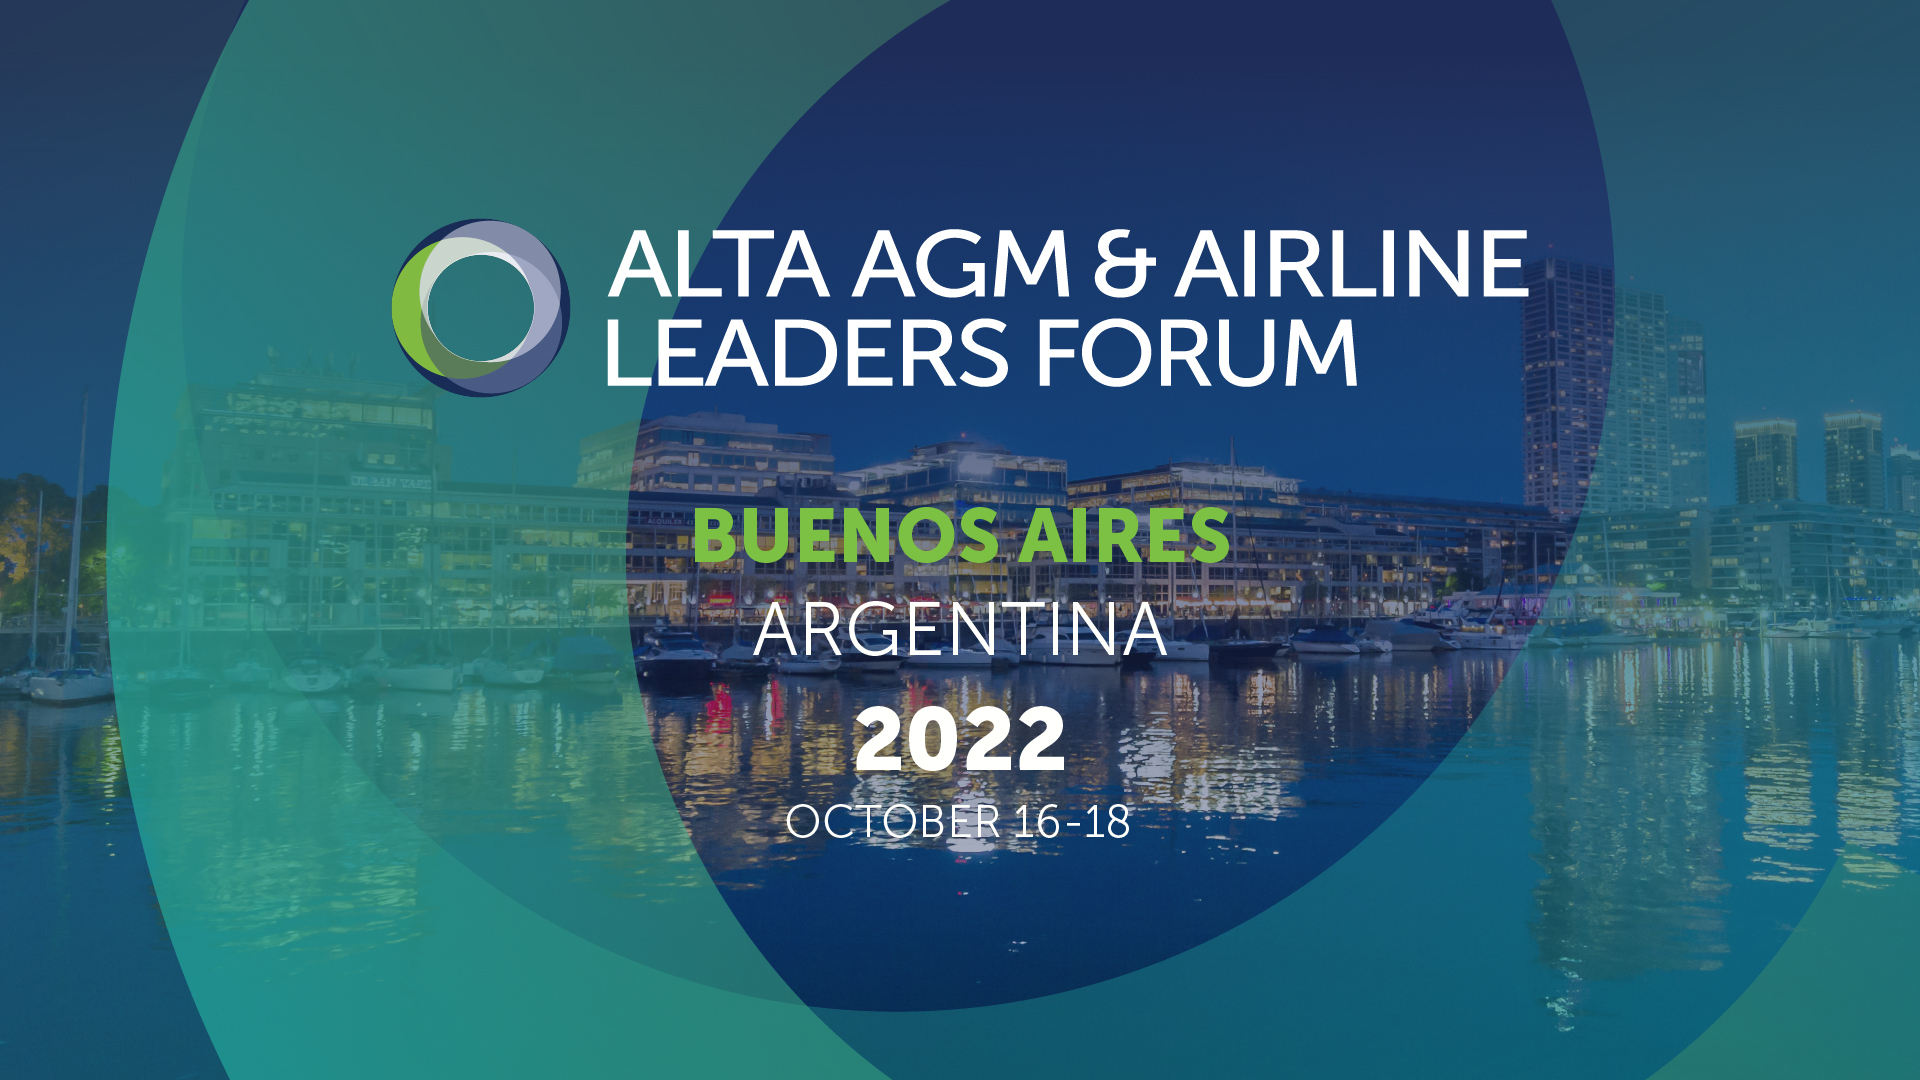 ALTA NEWS - CEO de Avianca, Adrian Neuhauser, es elegido Presidente del Comité Ejecutivo de ALTA